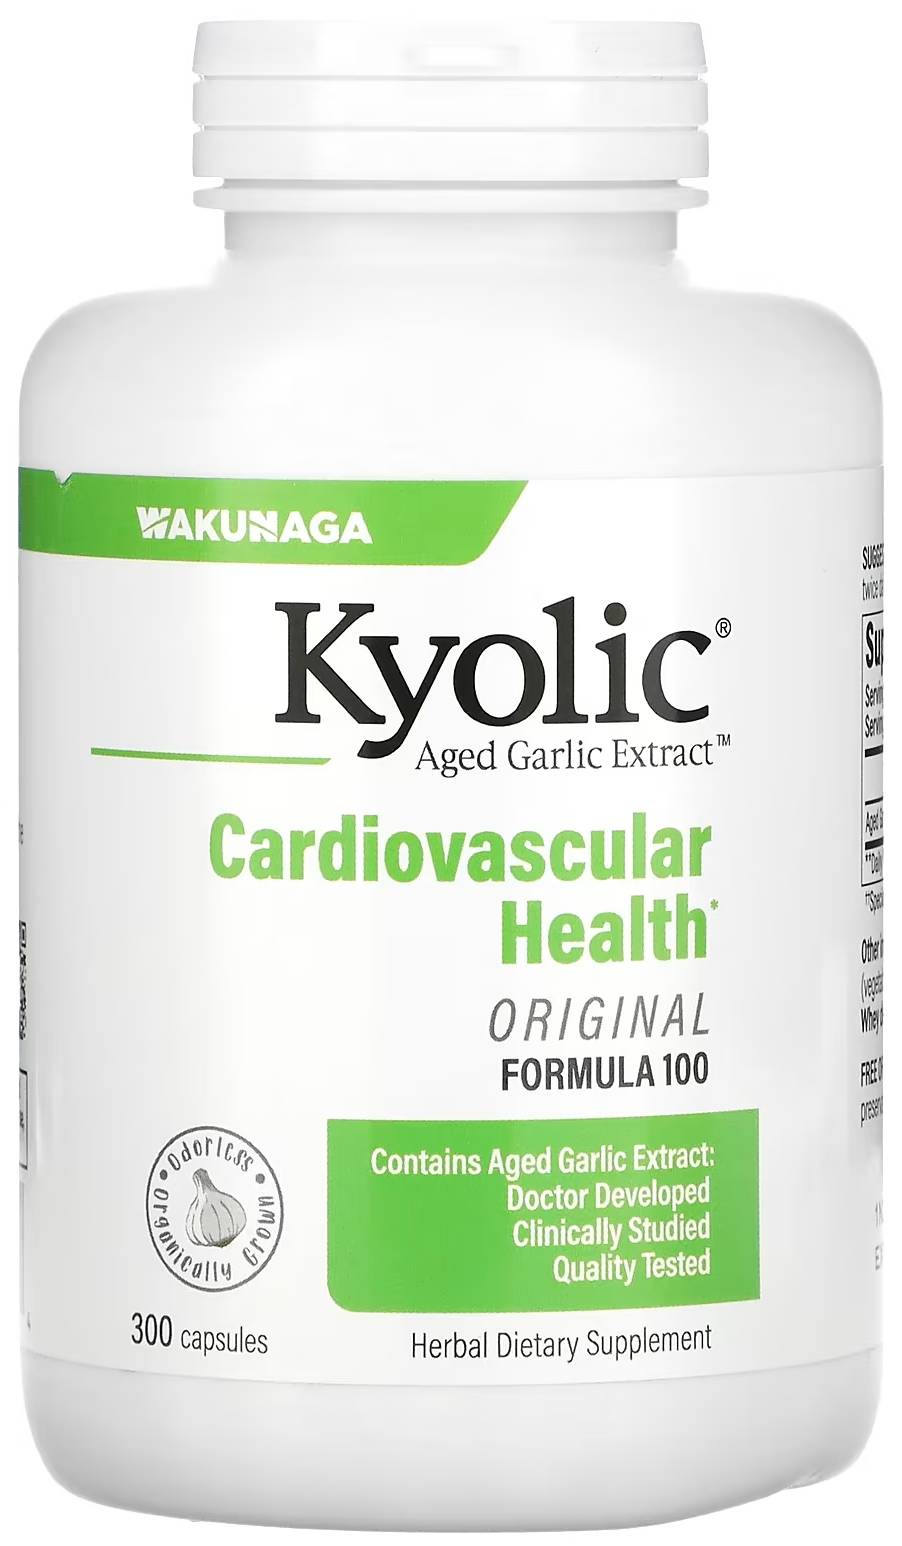 WAKUNAGA/KYOLIC: Kyolic Aged Garlic Extract Hi-Po Formula 100 300 caps